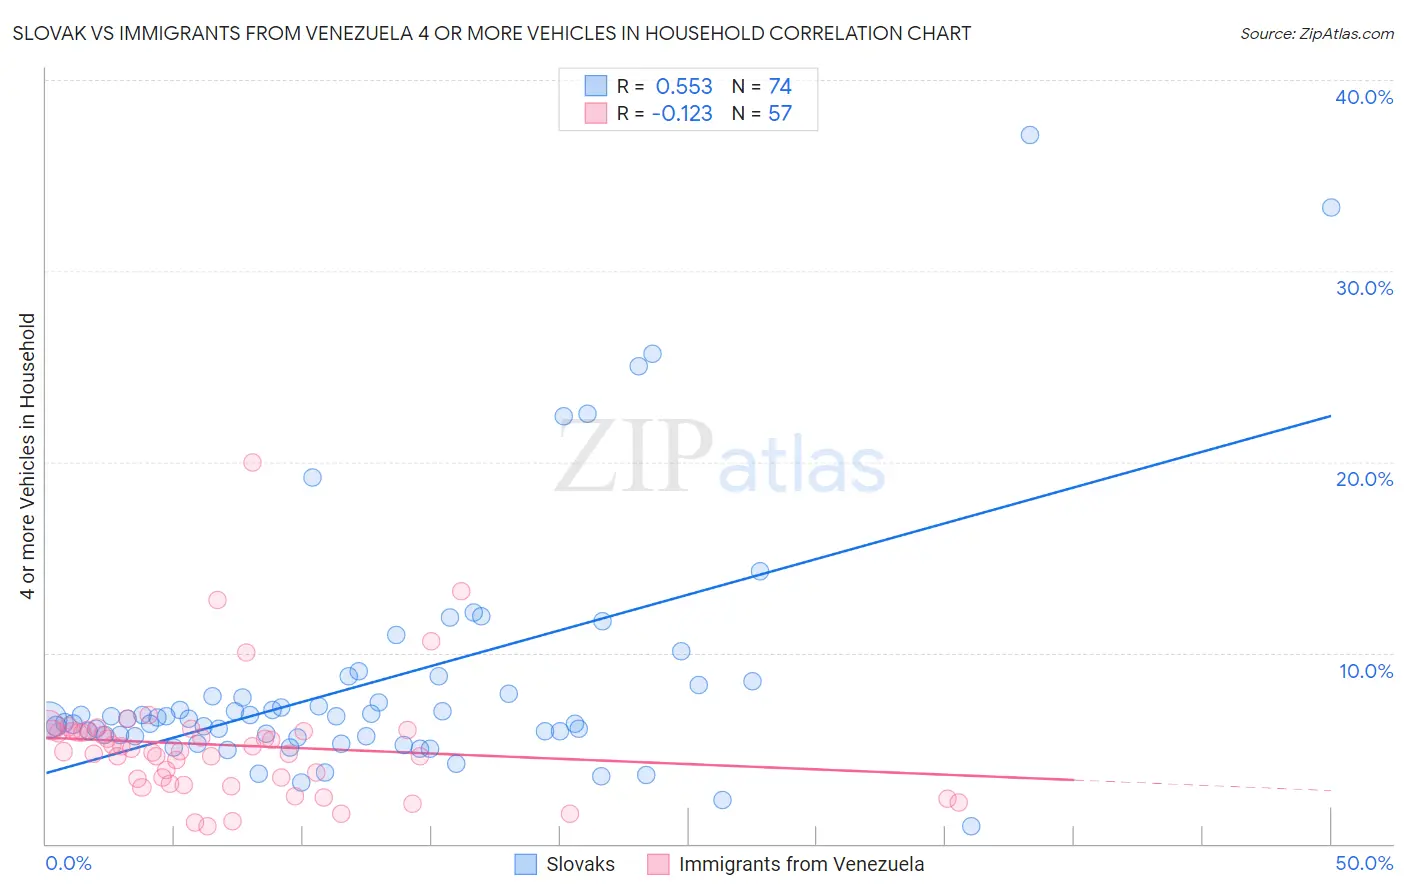 Slovak vs Immigrants from Venezuela 4 or more Vehicles in Household